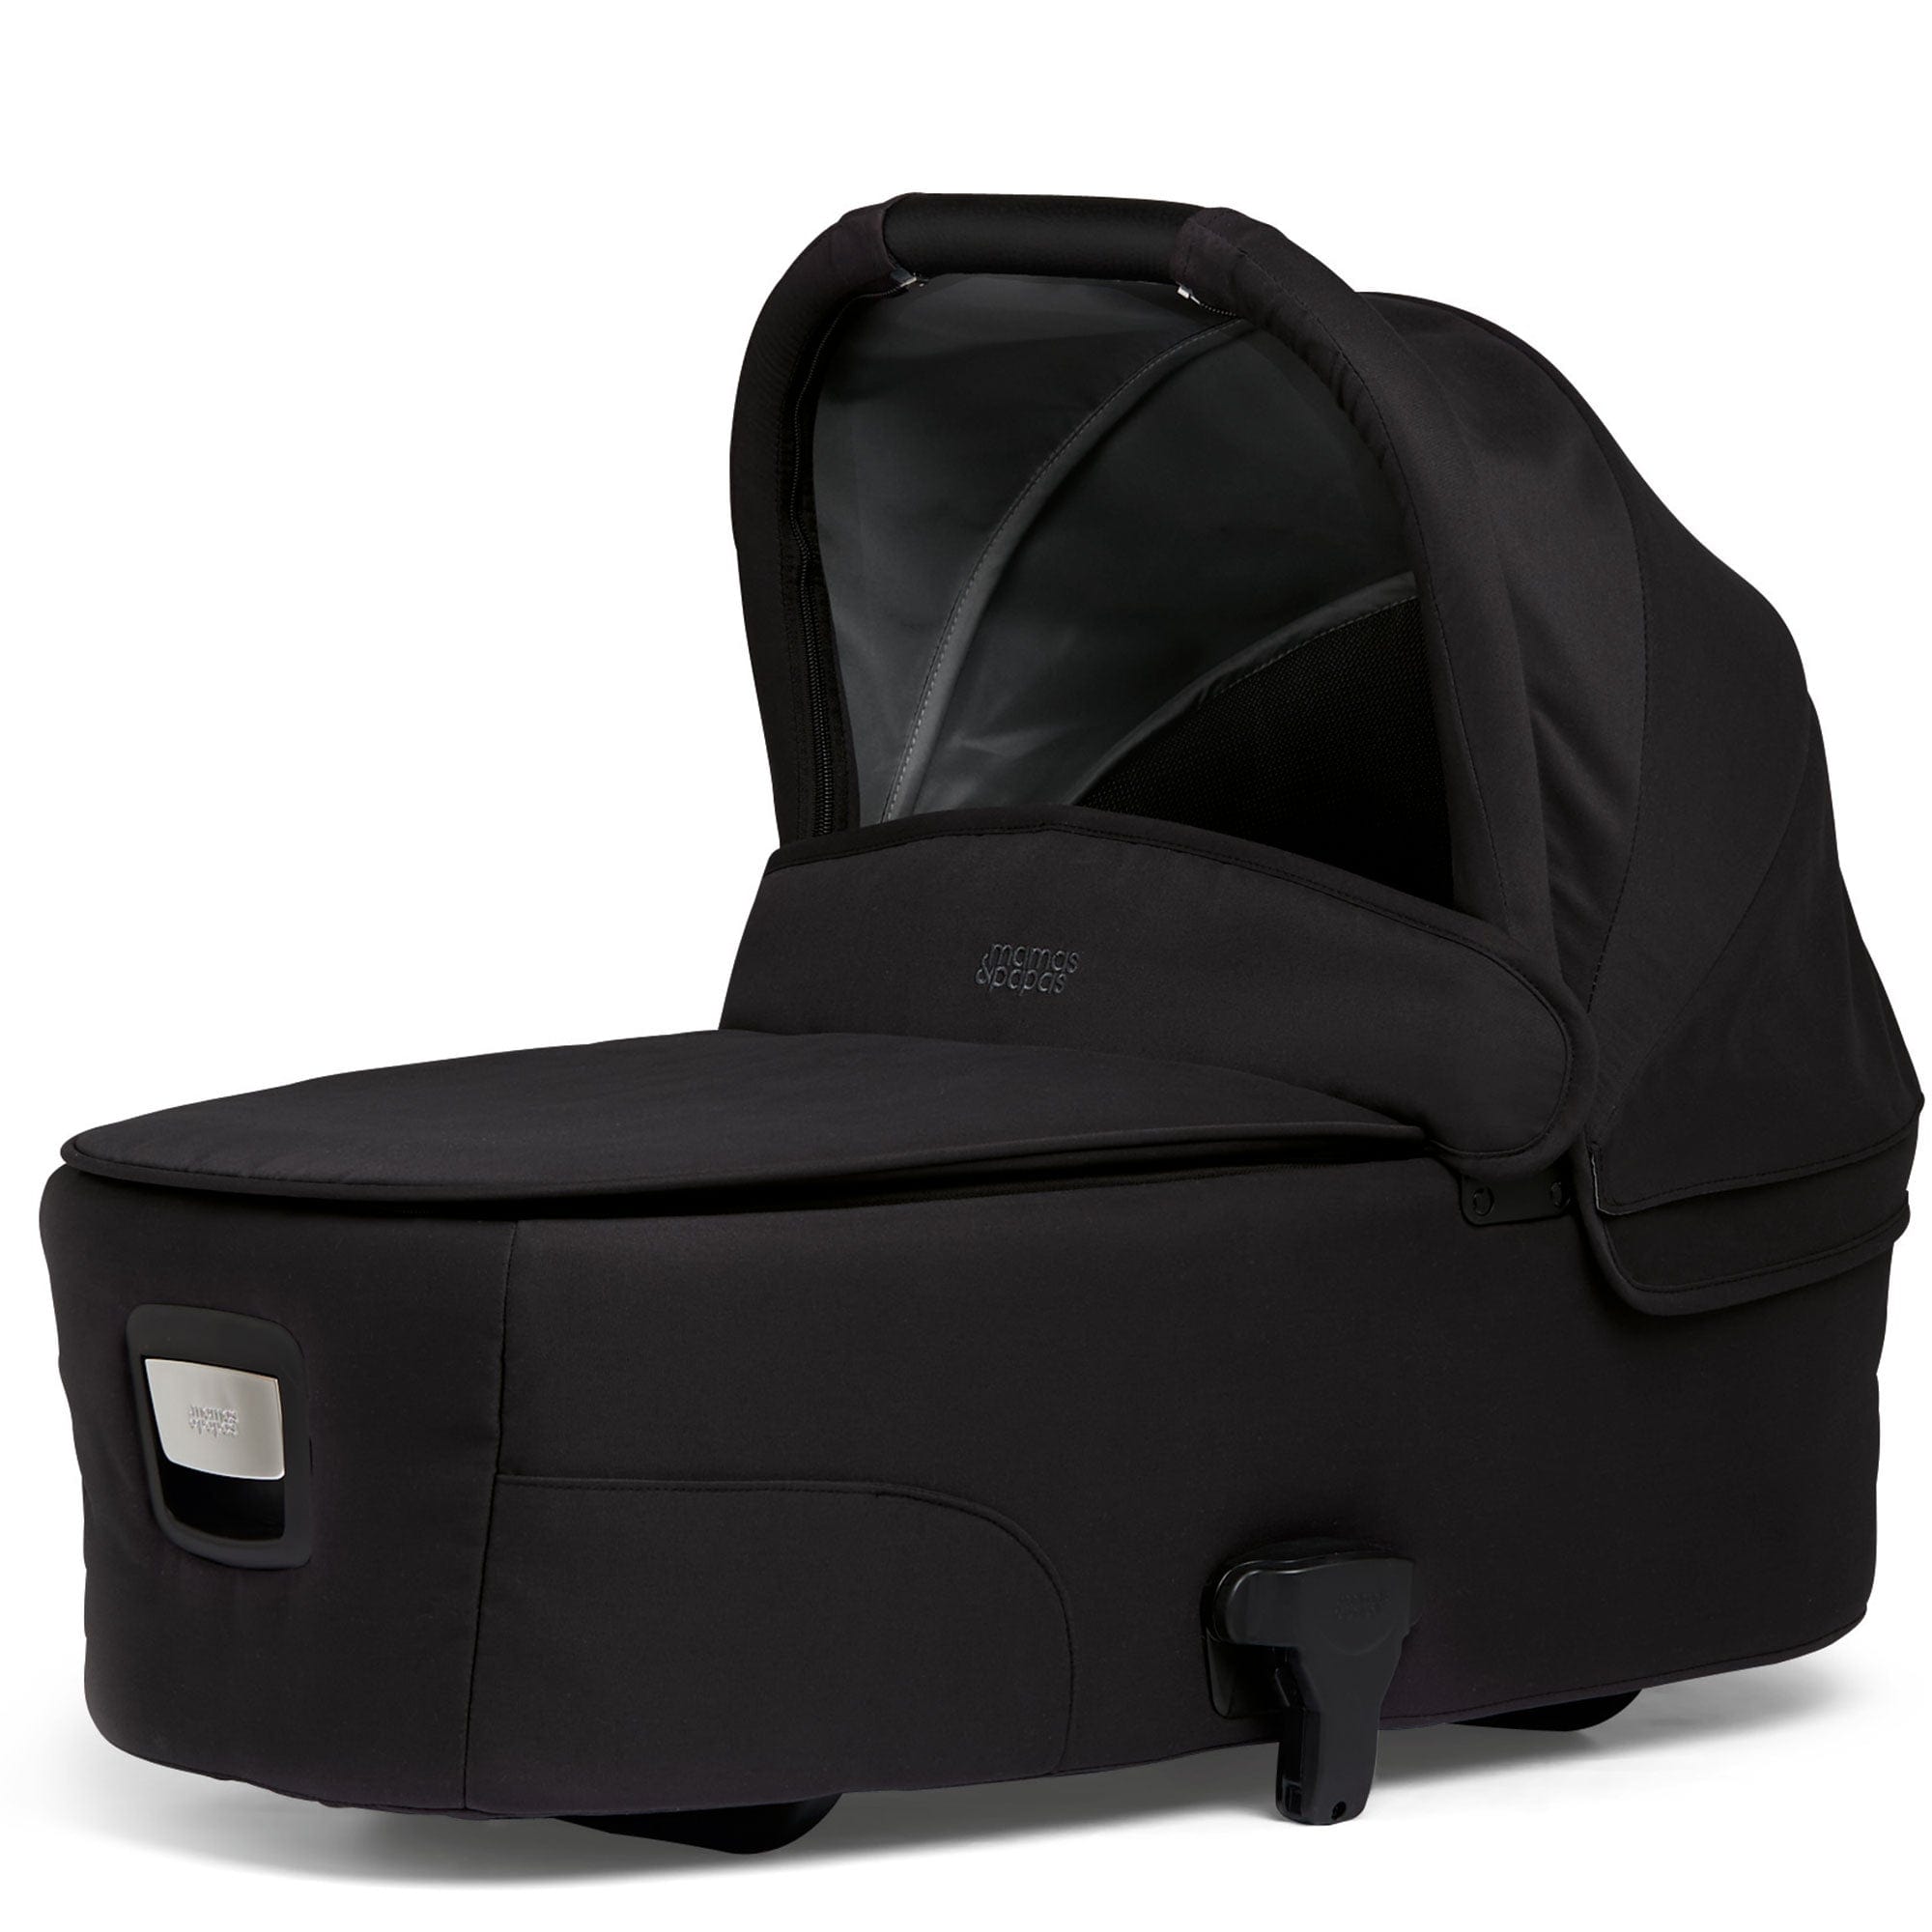 Mamas & Papas Travel Systems Mamas & Papas Flip XT³ 8 Piece Essentials Bundle with Car Seat - Slated Navy